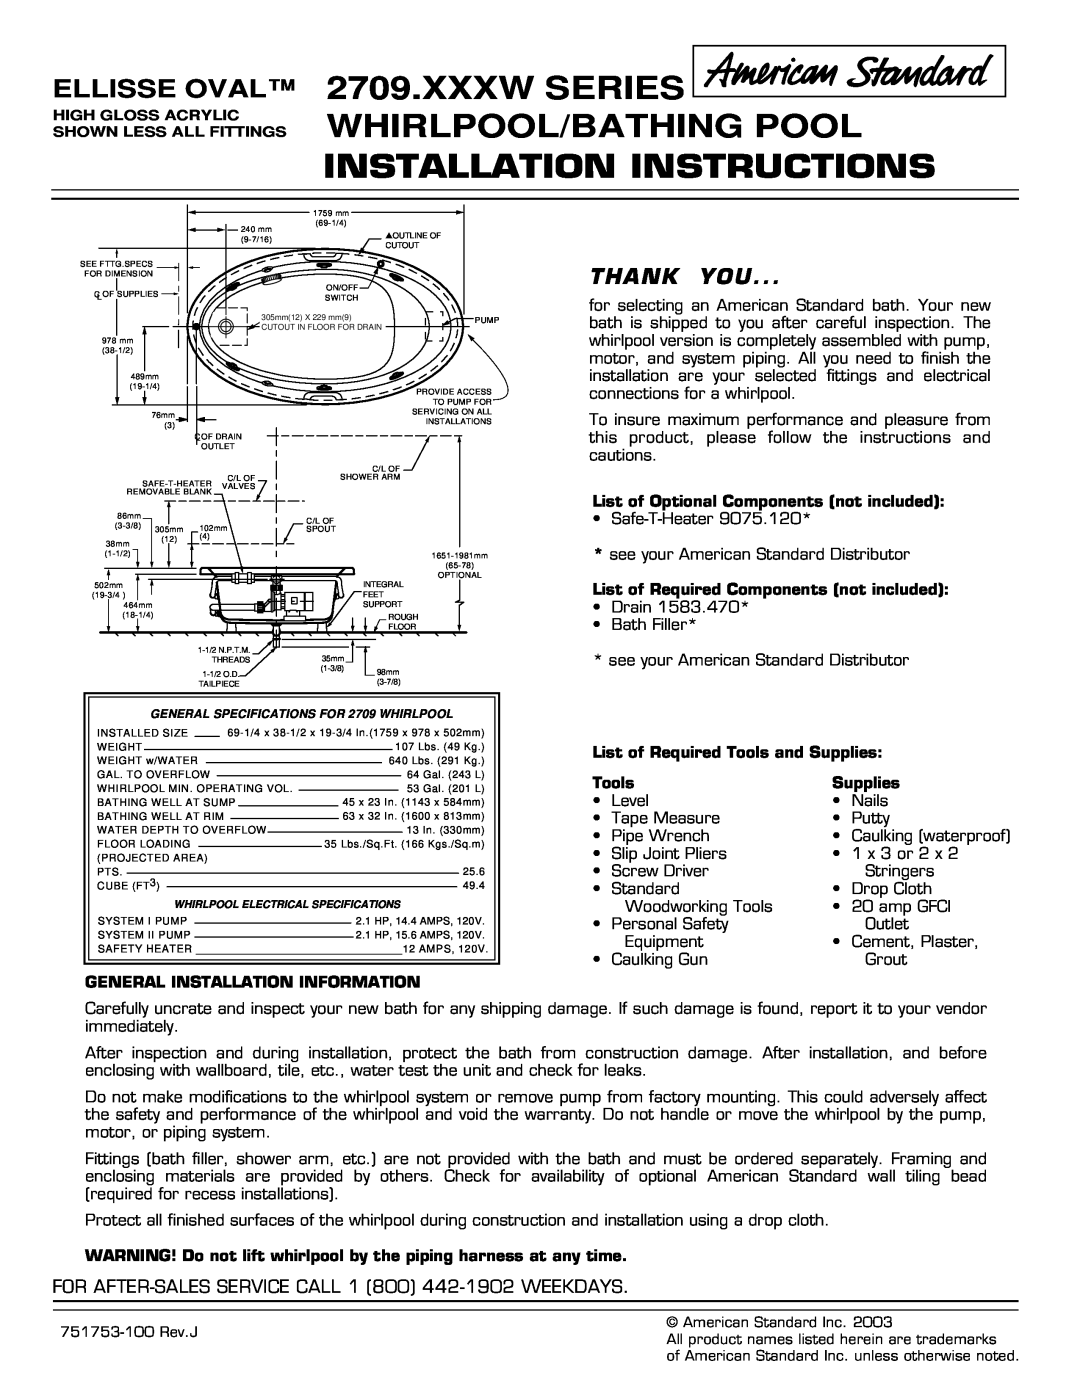 American Standard 2709.XXXW installation instructions Xxxw Series Whirlpool/Bathing Pool, Installation Instructions, Tools 